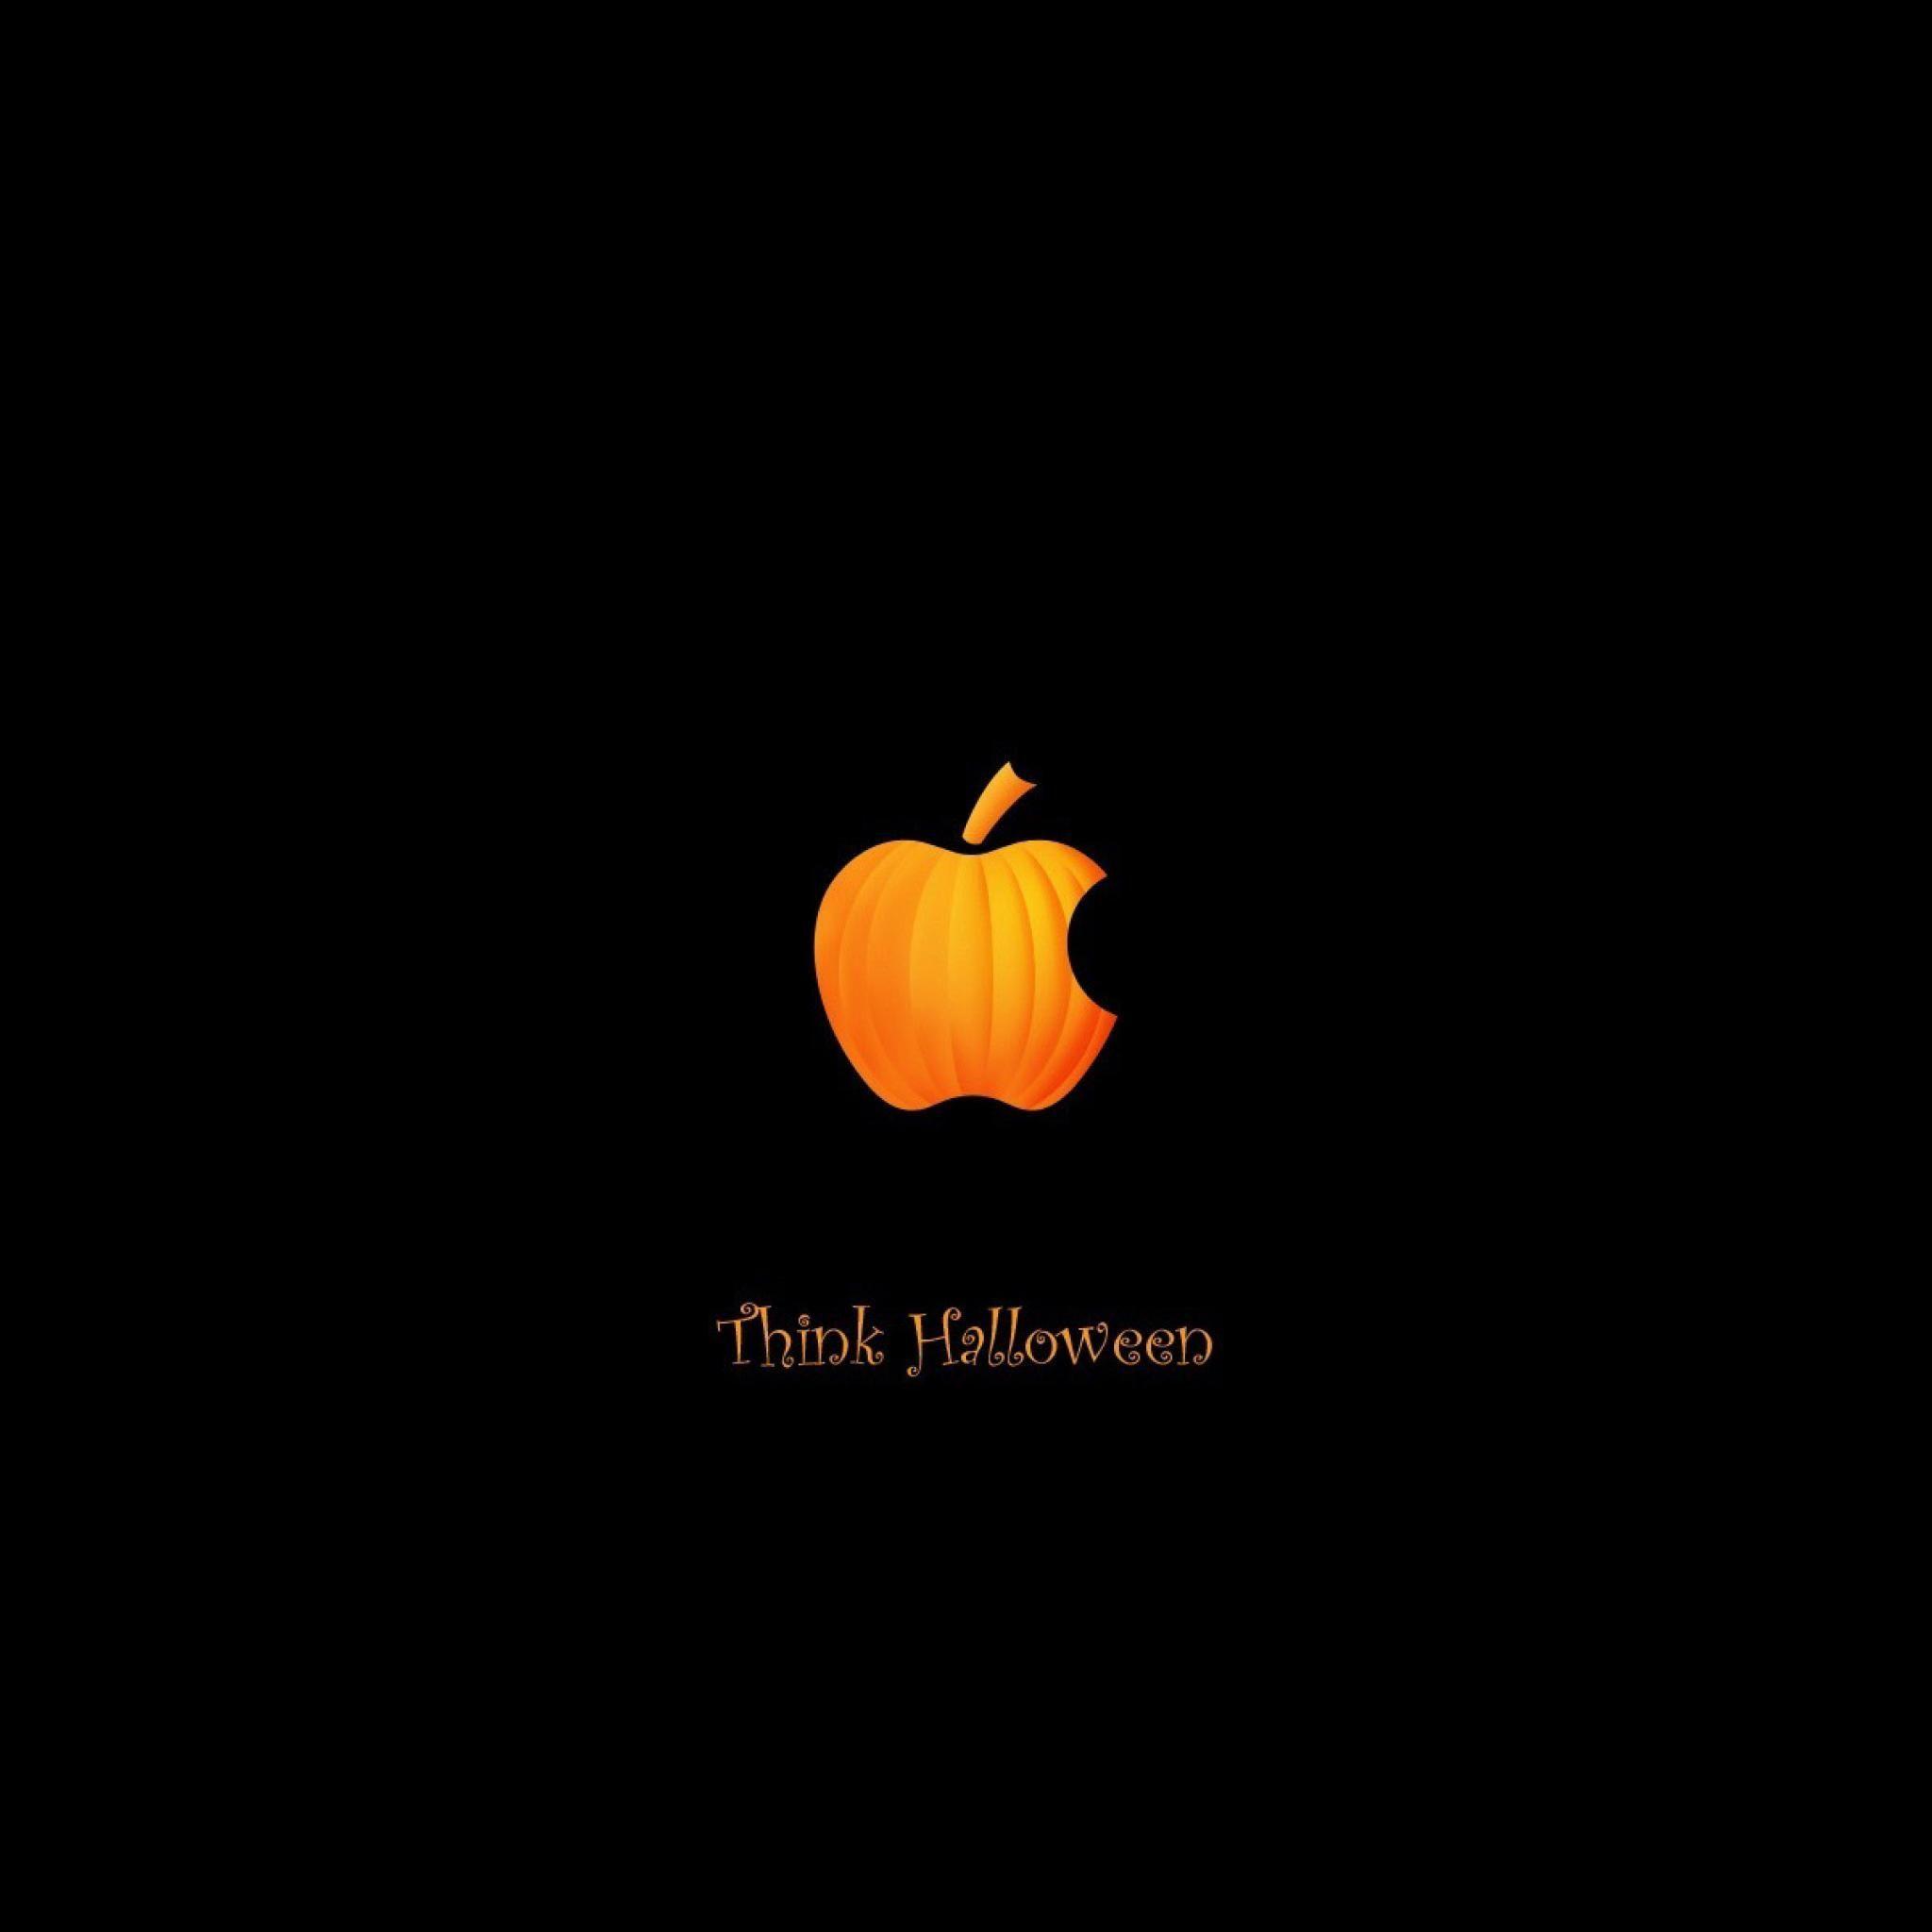 Halloween Ipad Wallpapers Top Free Halloween Ipad Backgrounds Wallpaperaccess